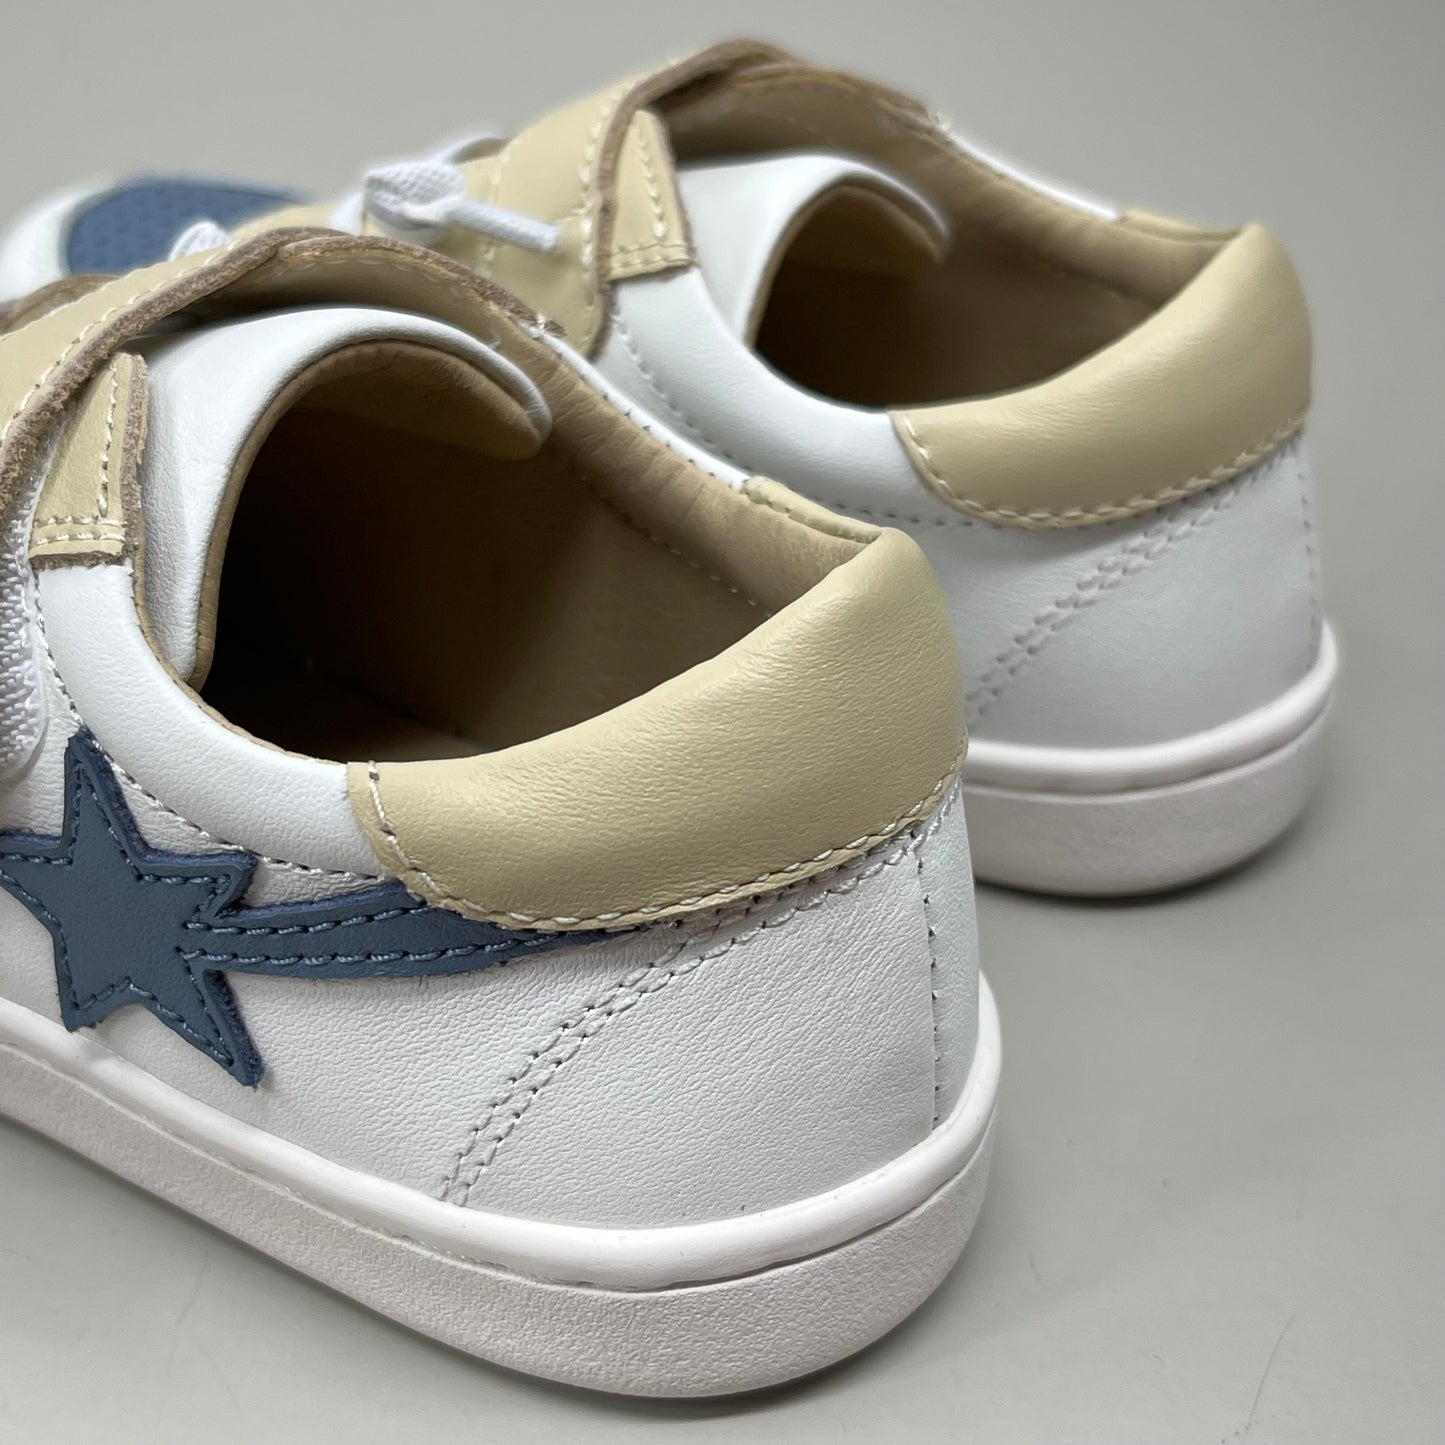 OLD SOLES Runsky Sneakers Leather Shoe Kid’s Sz 28 US 11 Cream/Indigo/Snow #6135